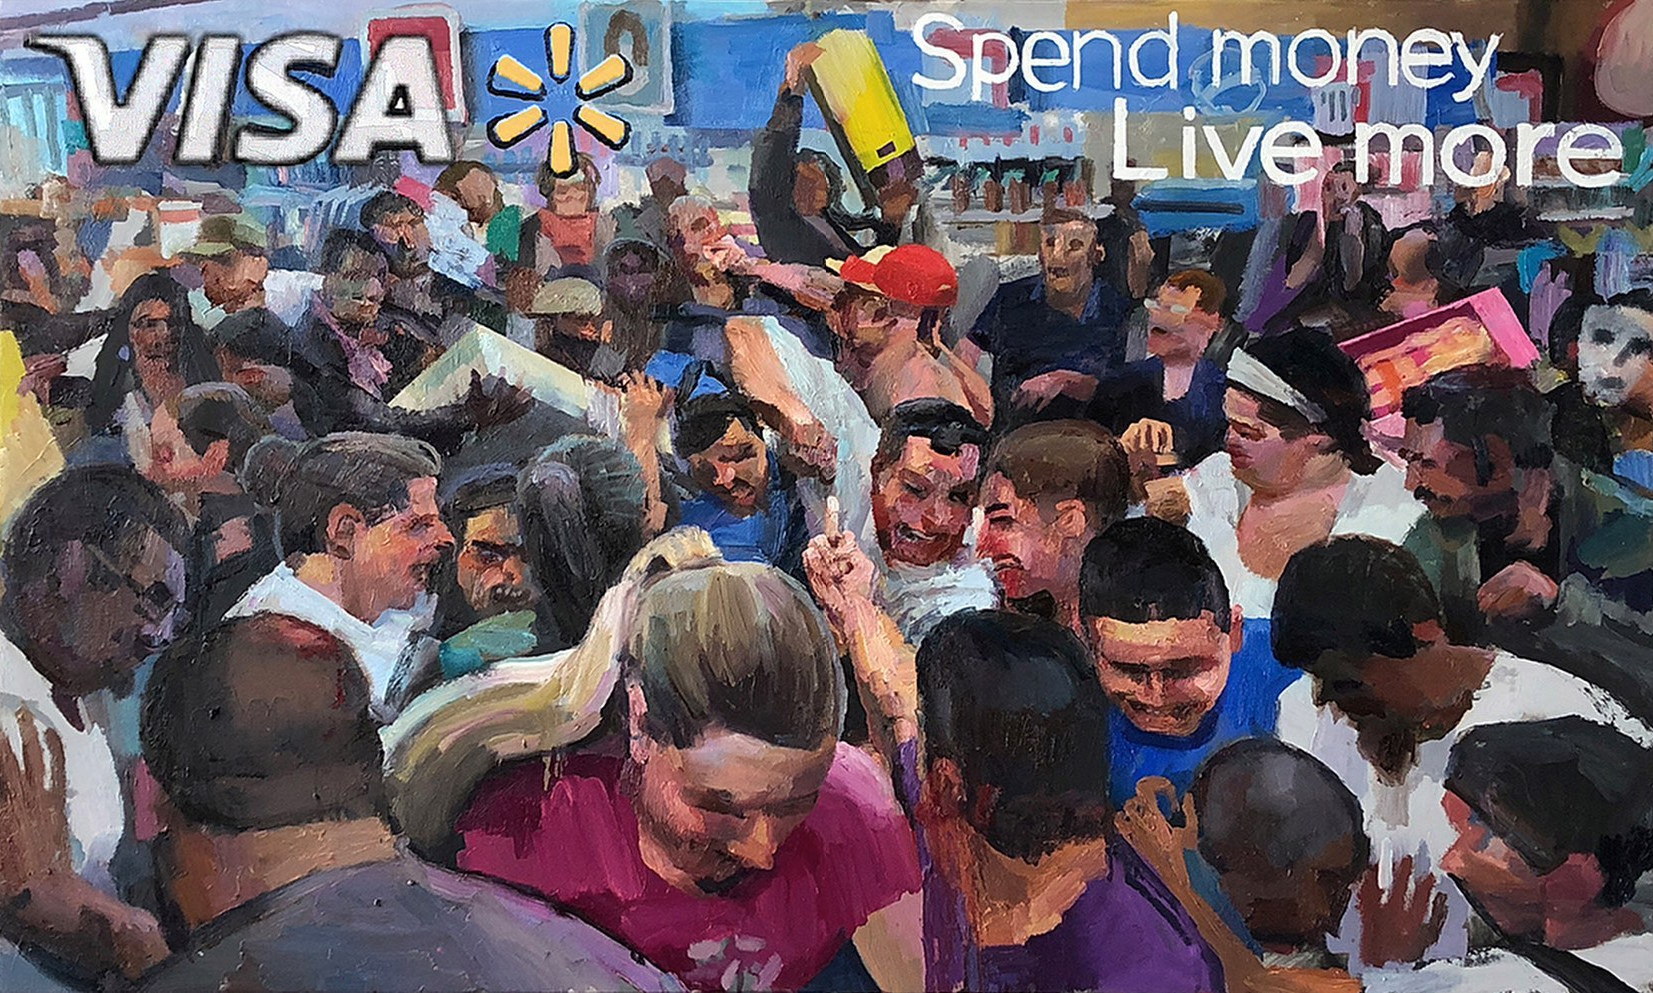 crowd - Visa! Spend money Live more